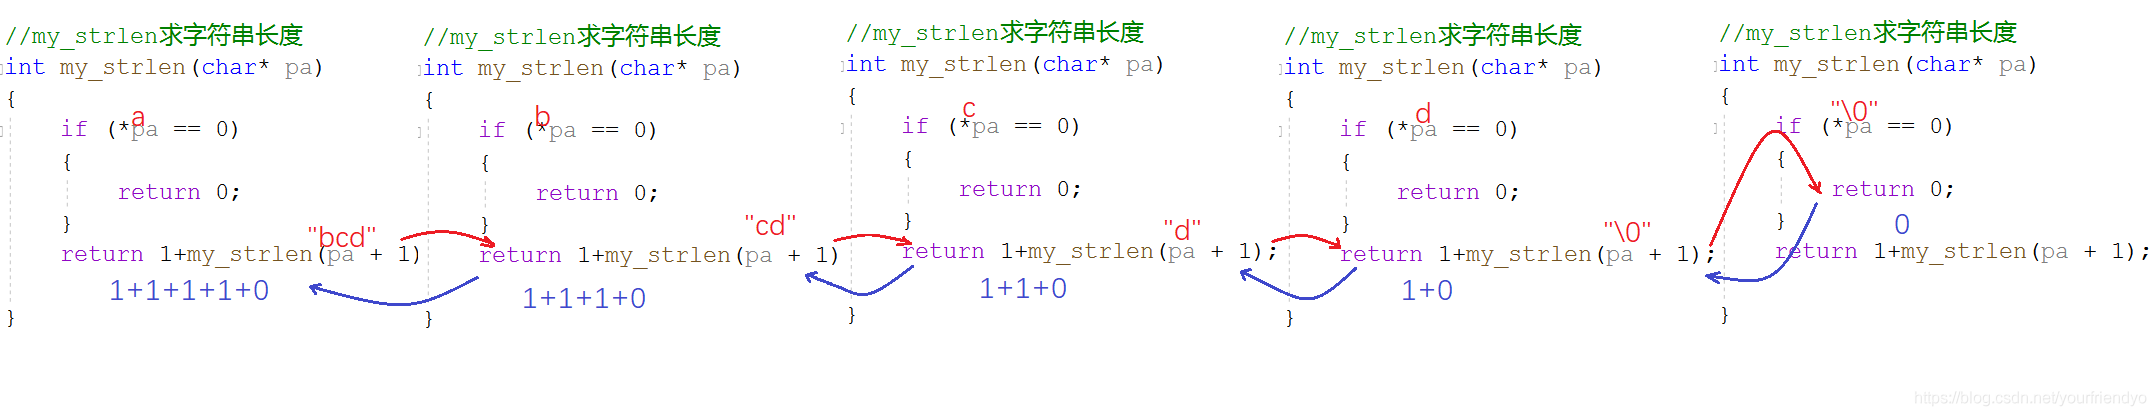 my_strlen求字符串長度函數解析